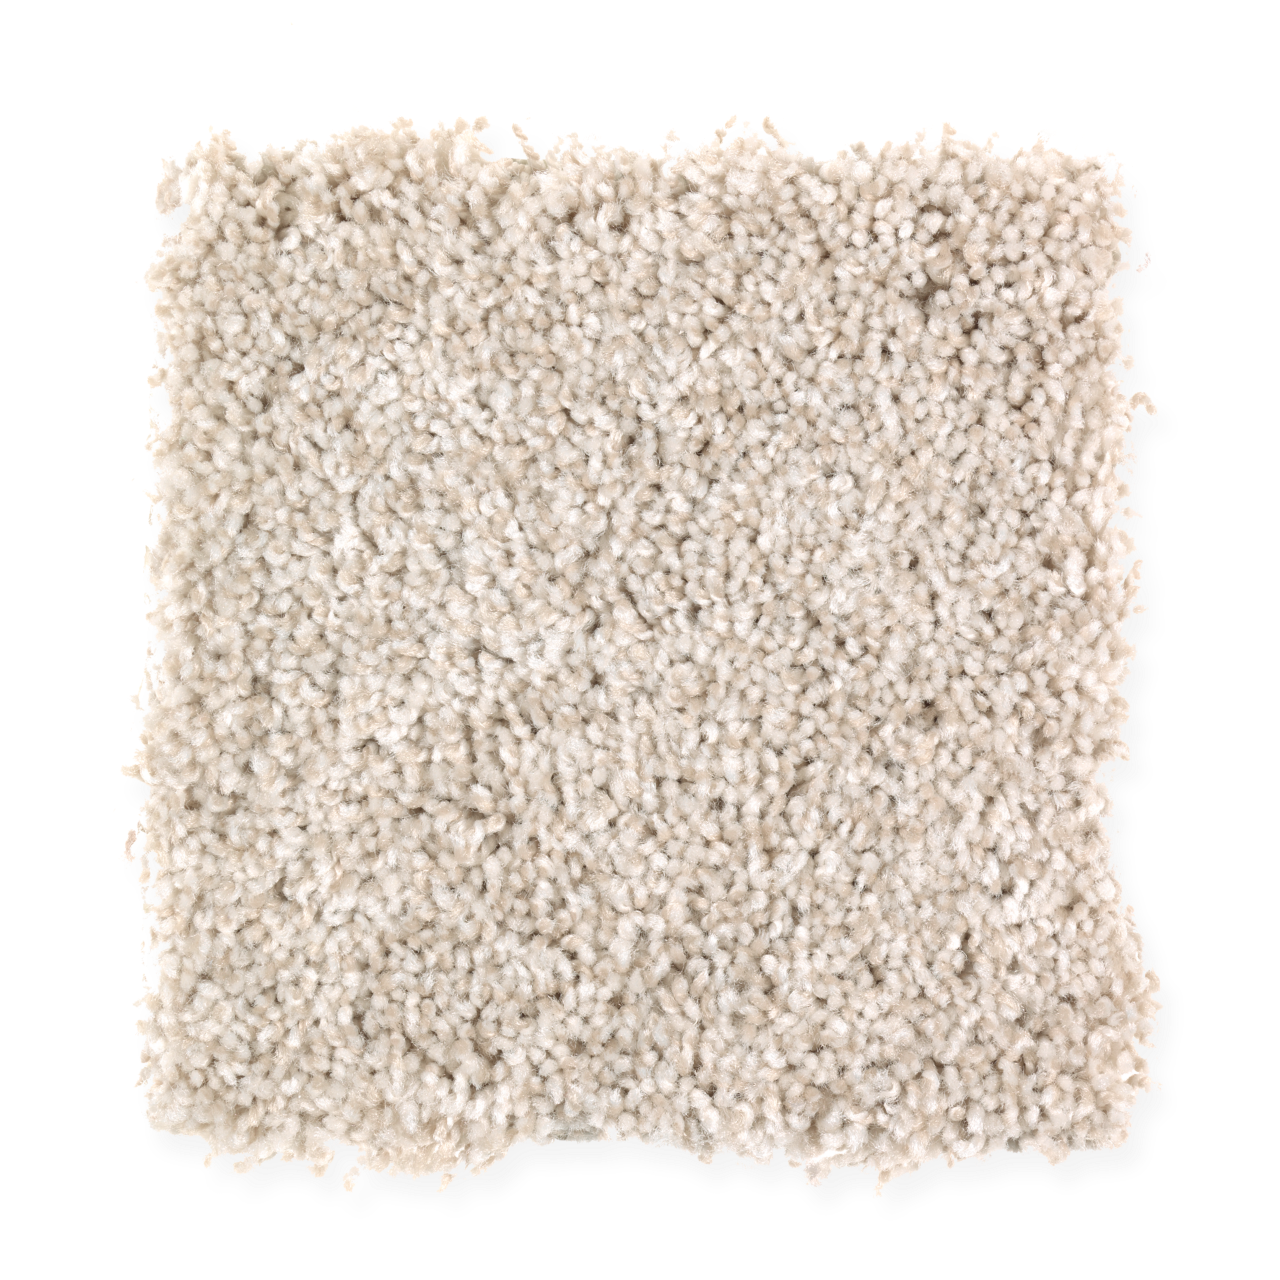 Wool Skein Embden (2885), Wool Carpet